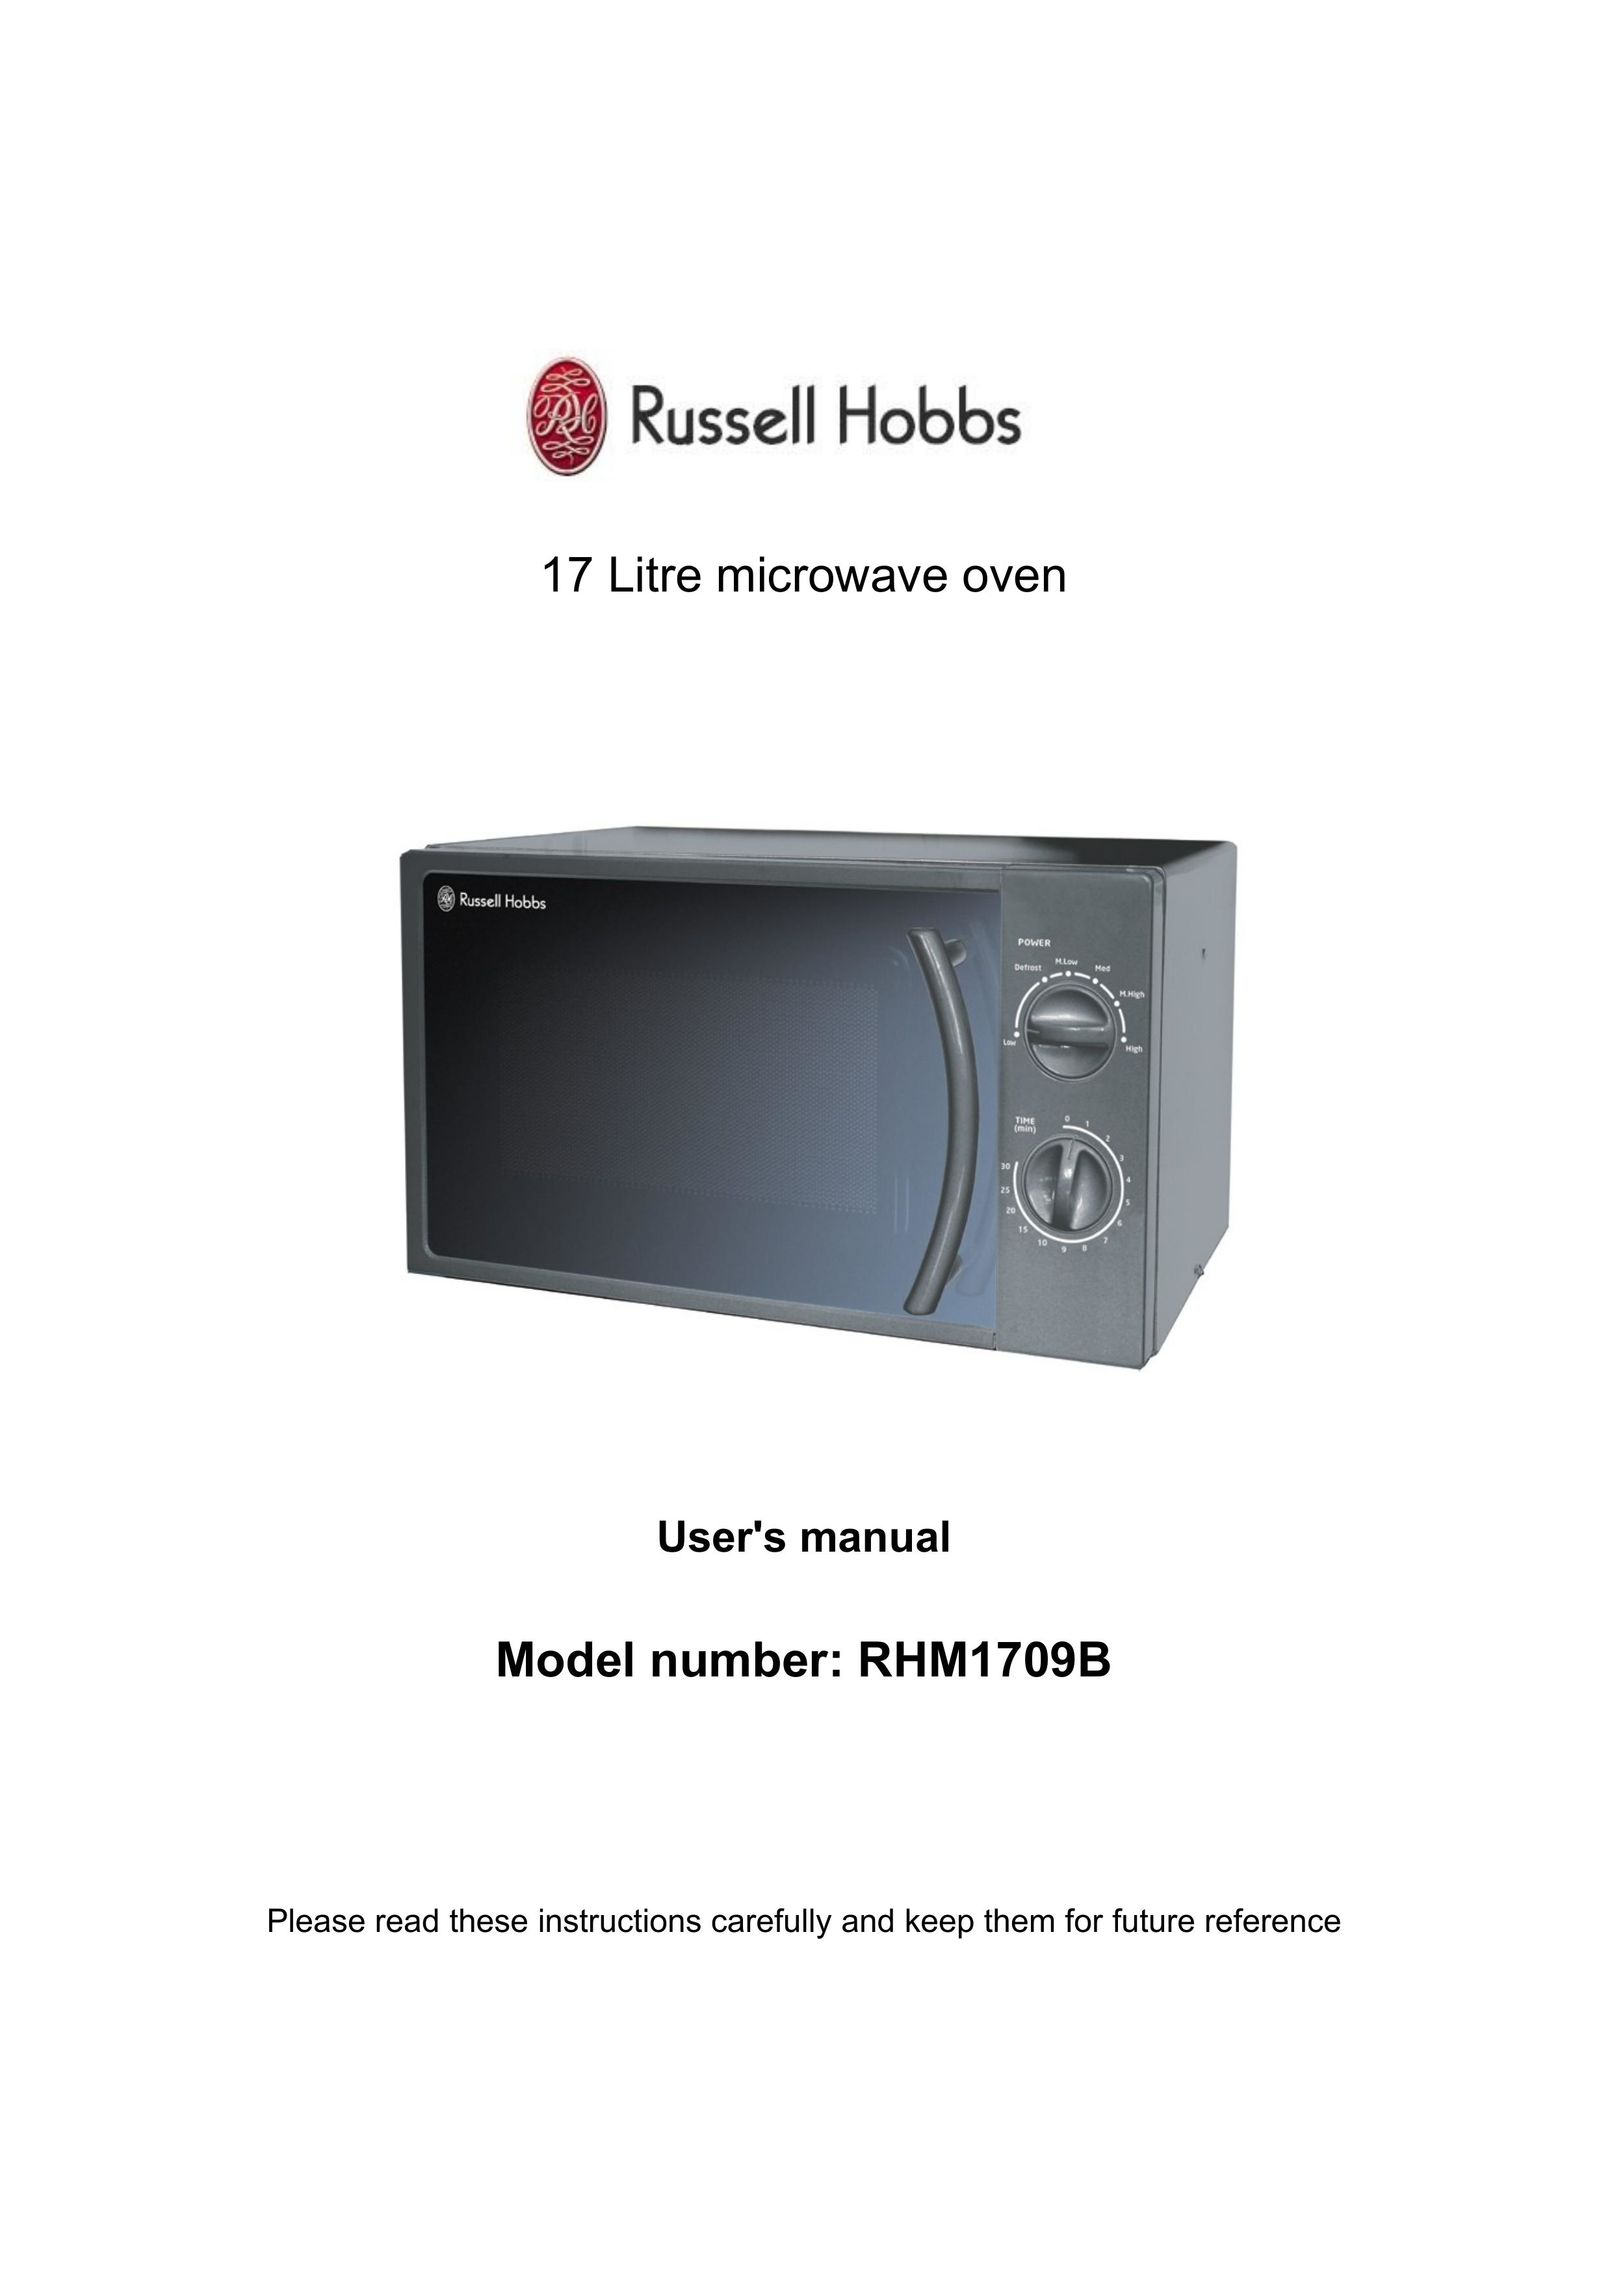 Russell Hobbs RHM1709B Microwave Oven User Manual